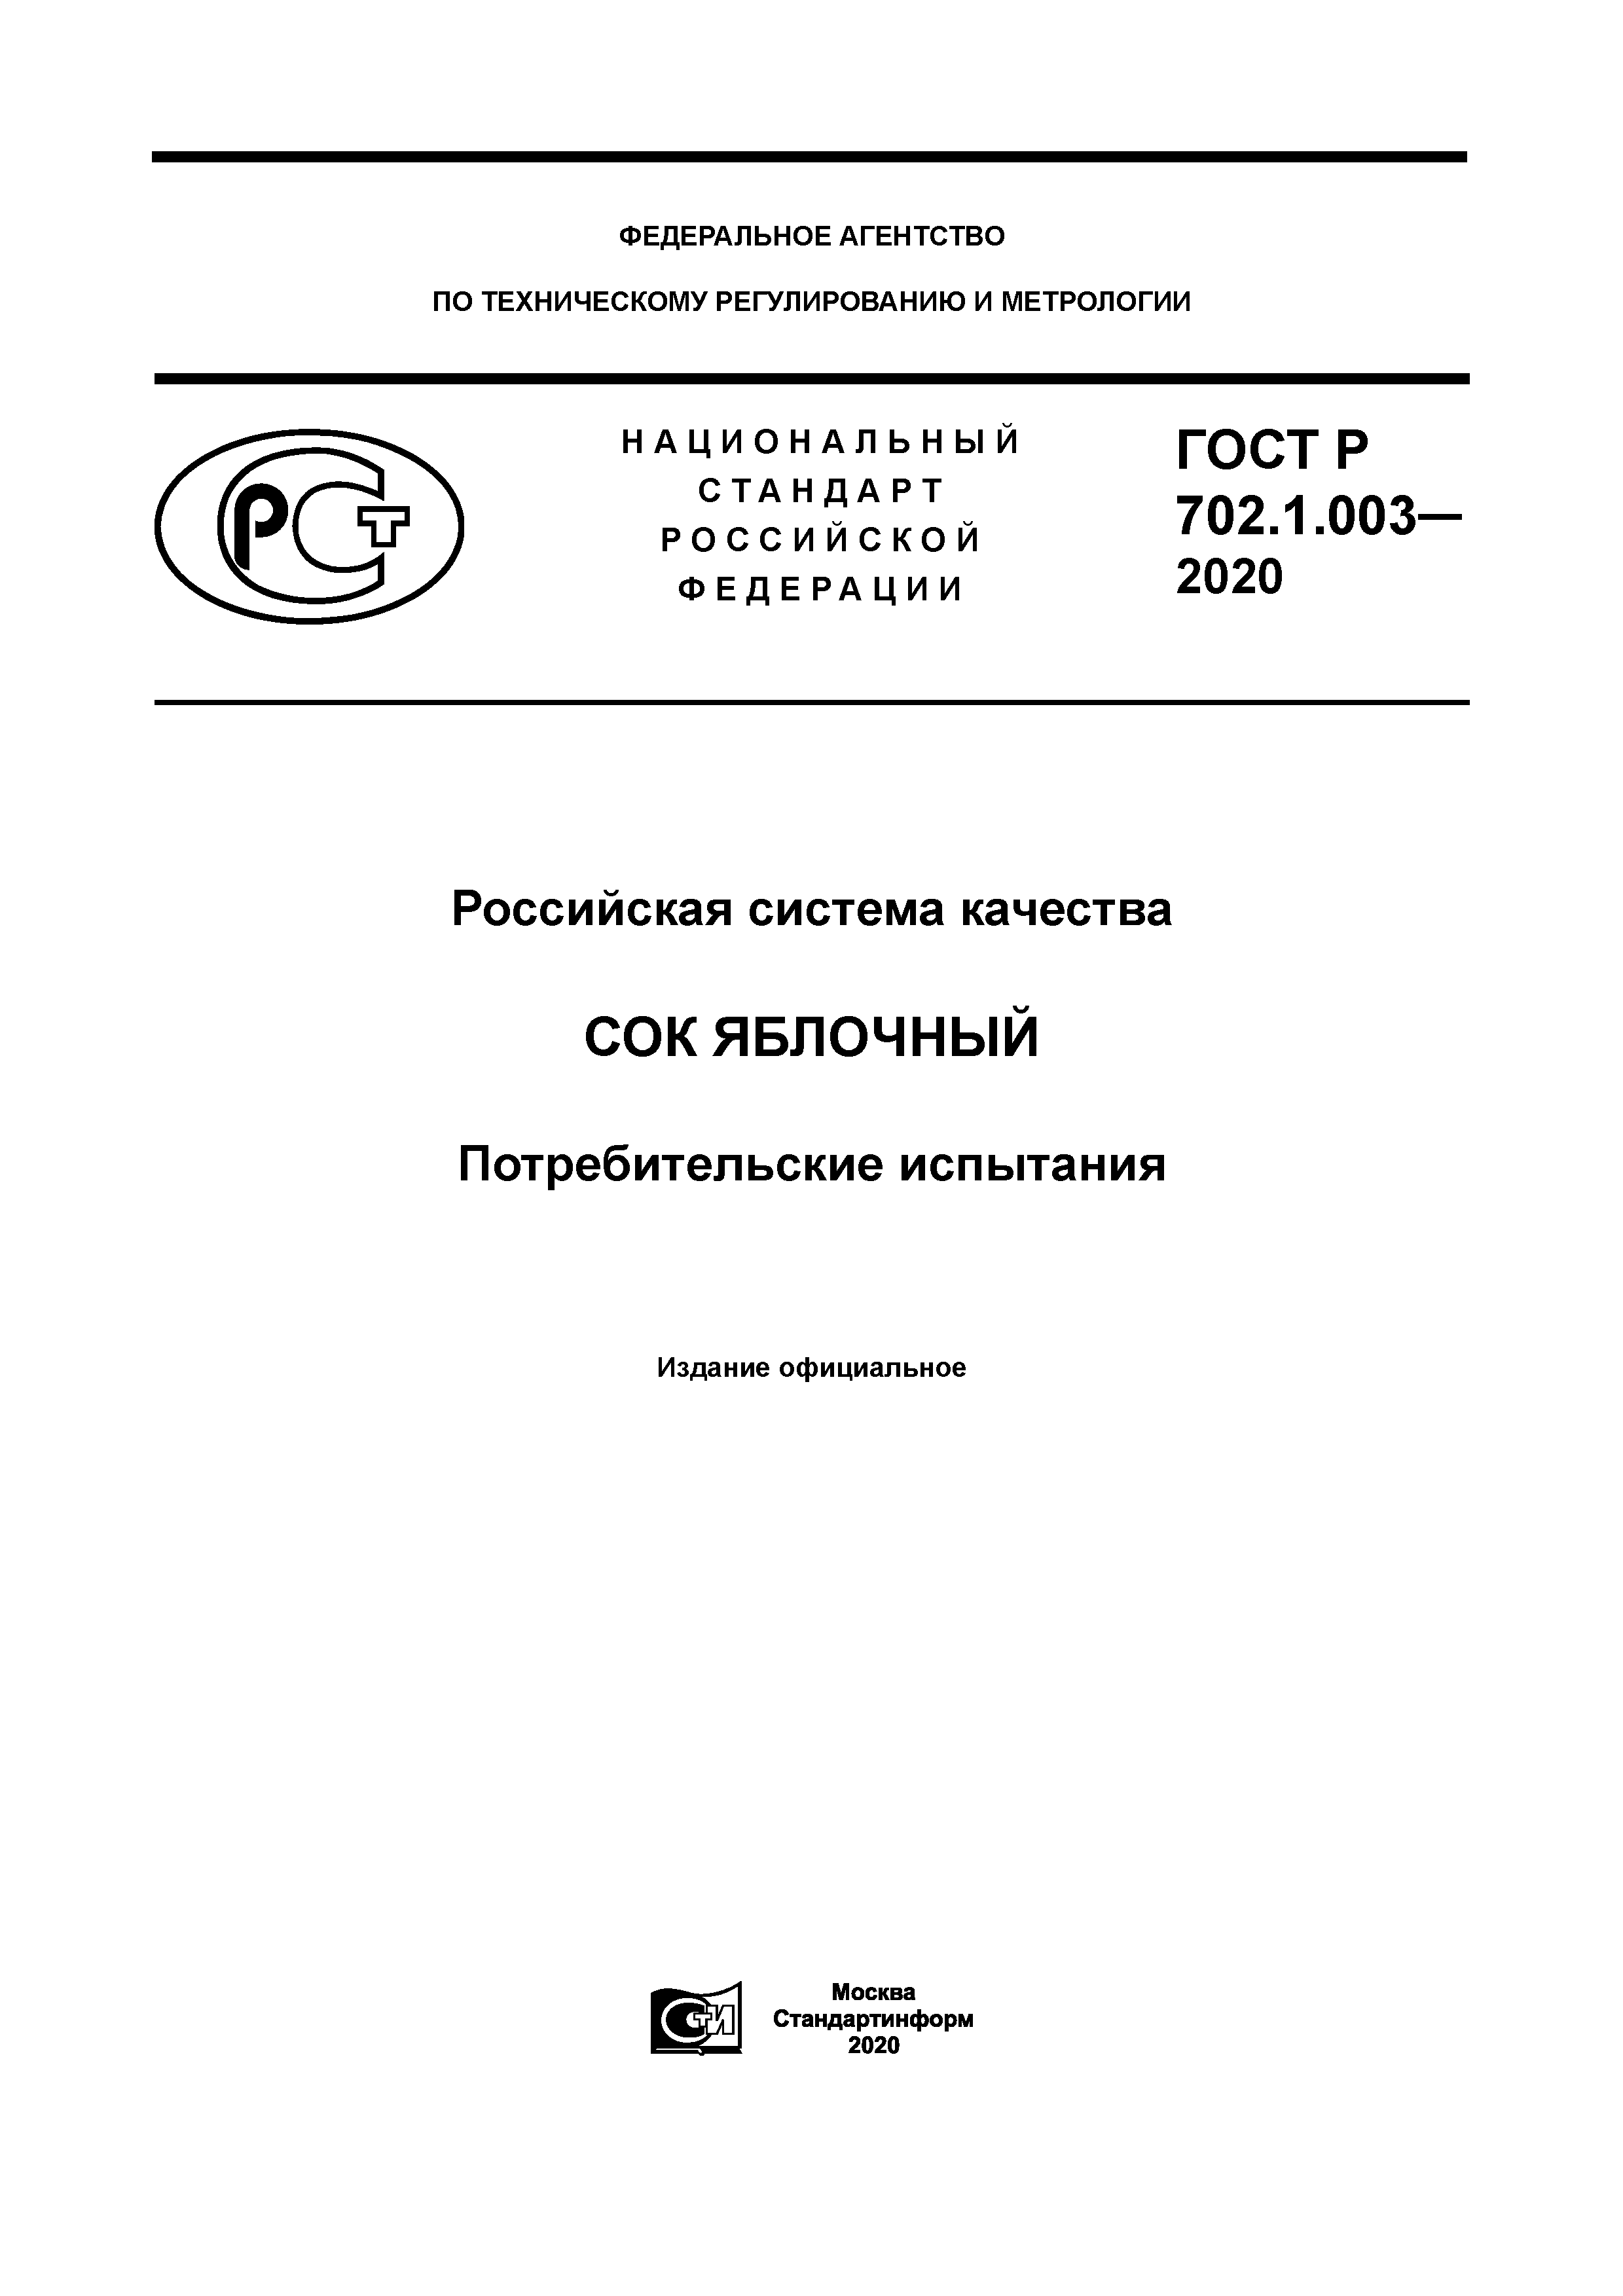 ГОСТ Р 702.1.003-2020